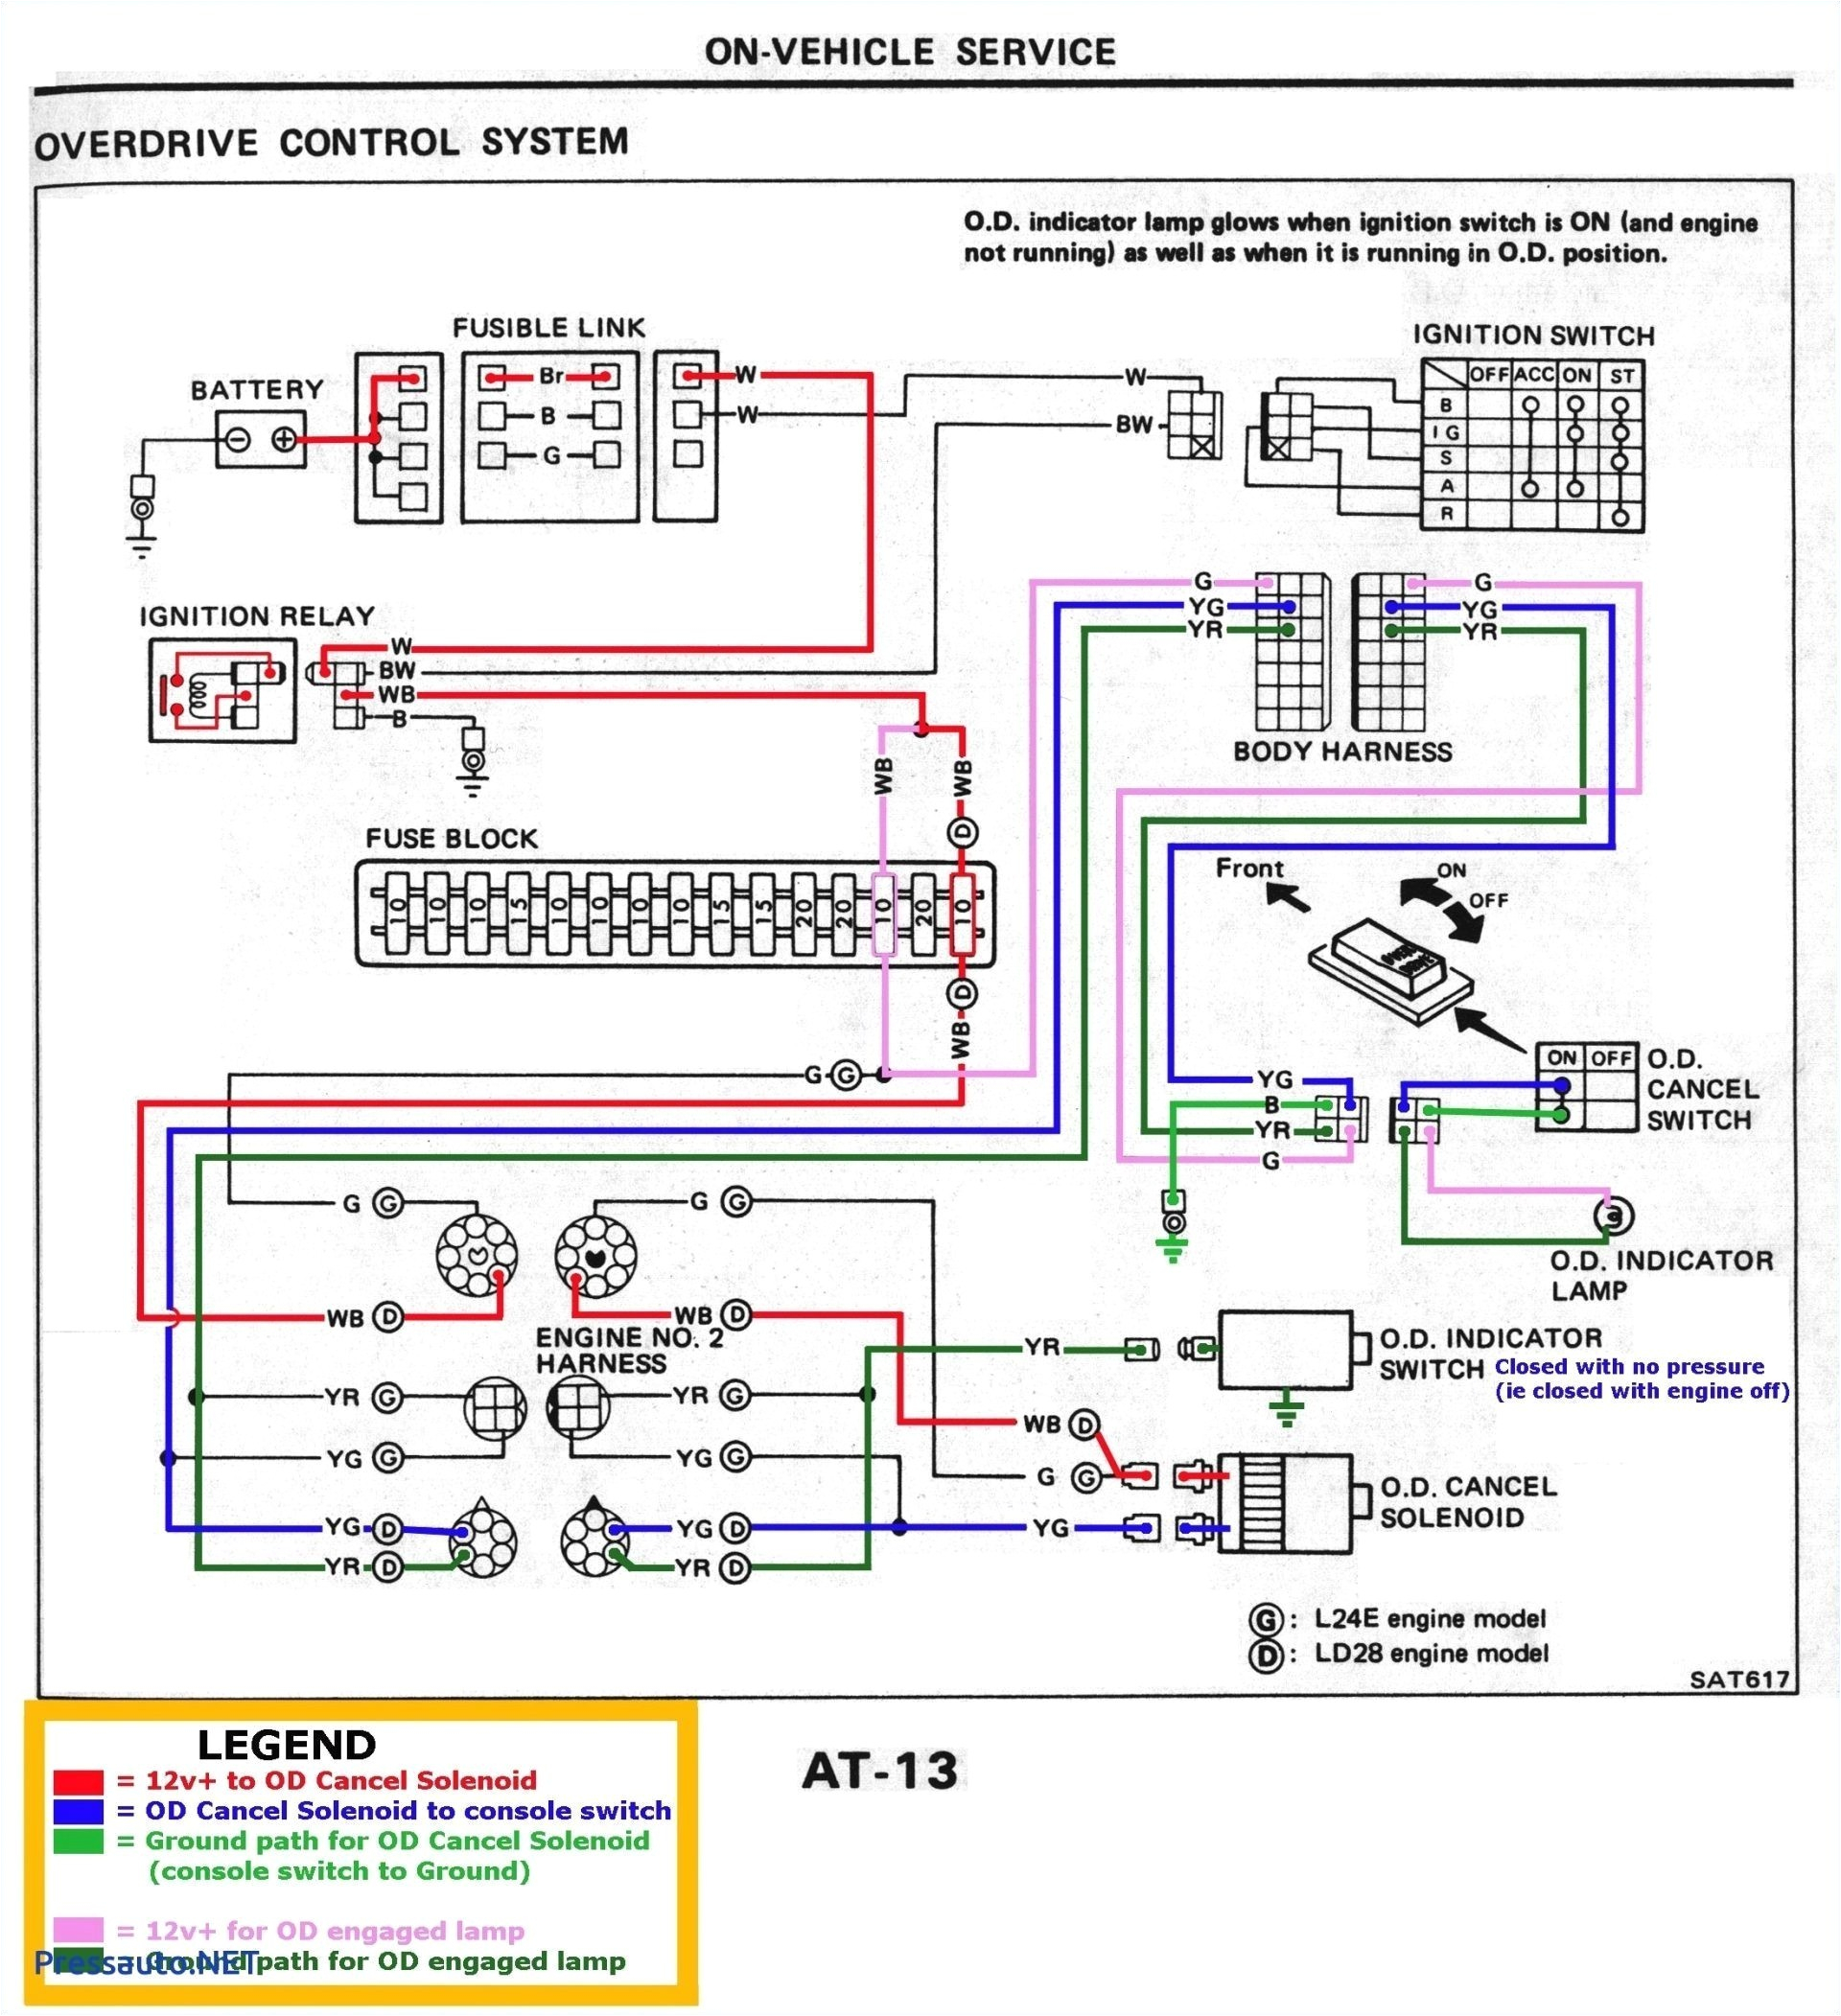 general electric motor wiring diagram wiring diagram for ge dryer motor save hotpoint dryer timer wiring of general electric motor wiring diagram jpg